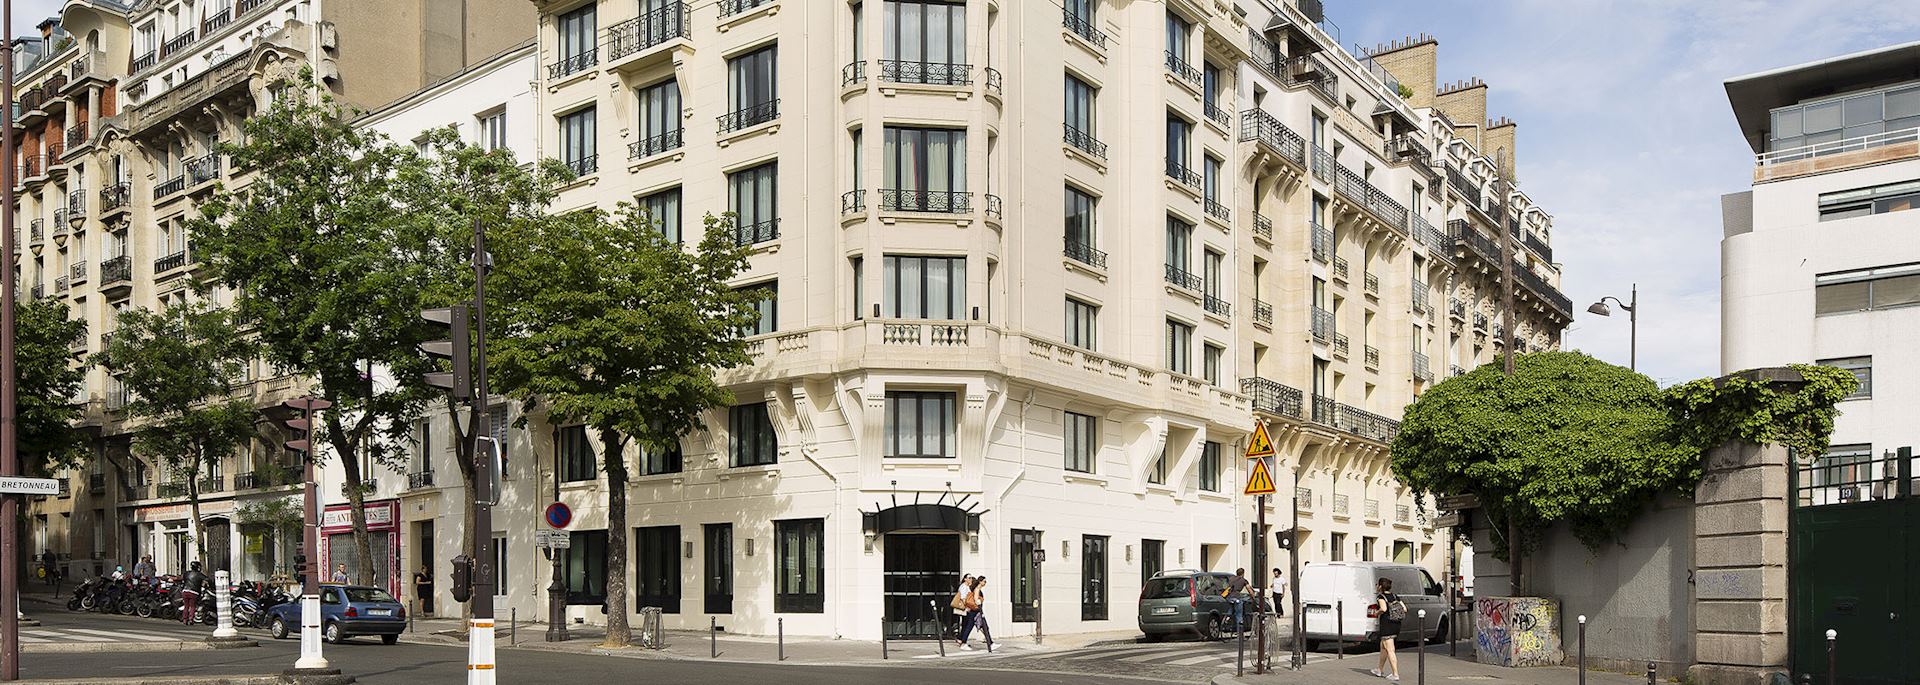 Terrass Hotel, Paris